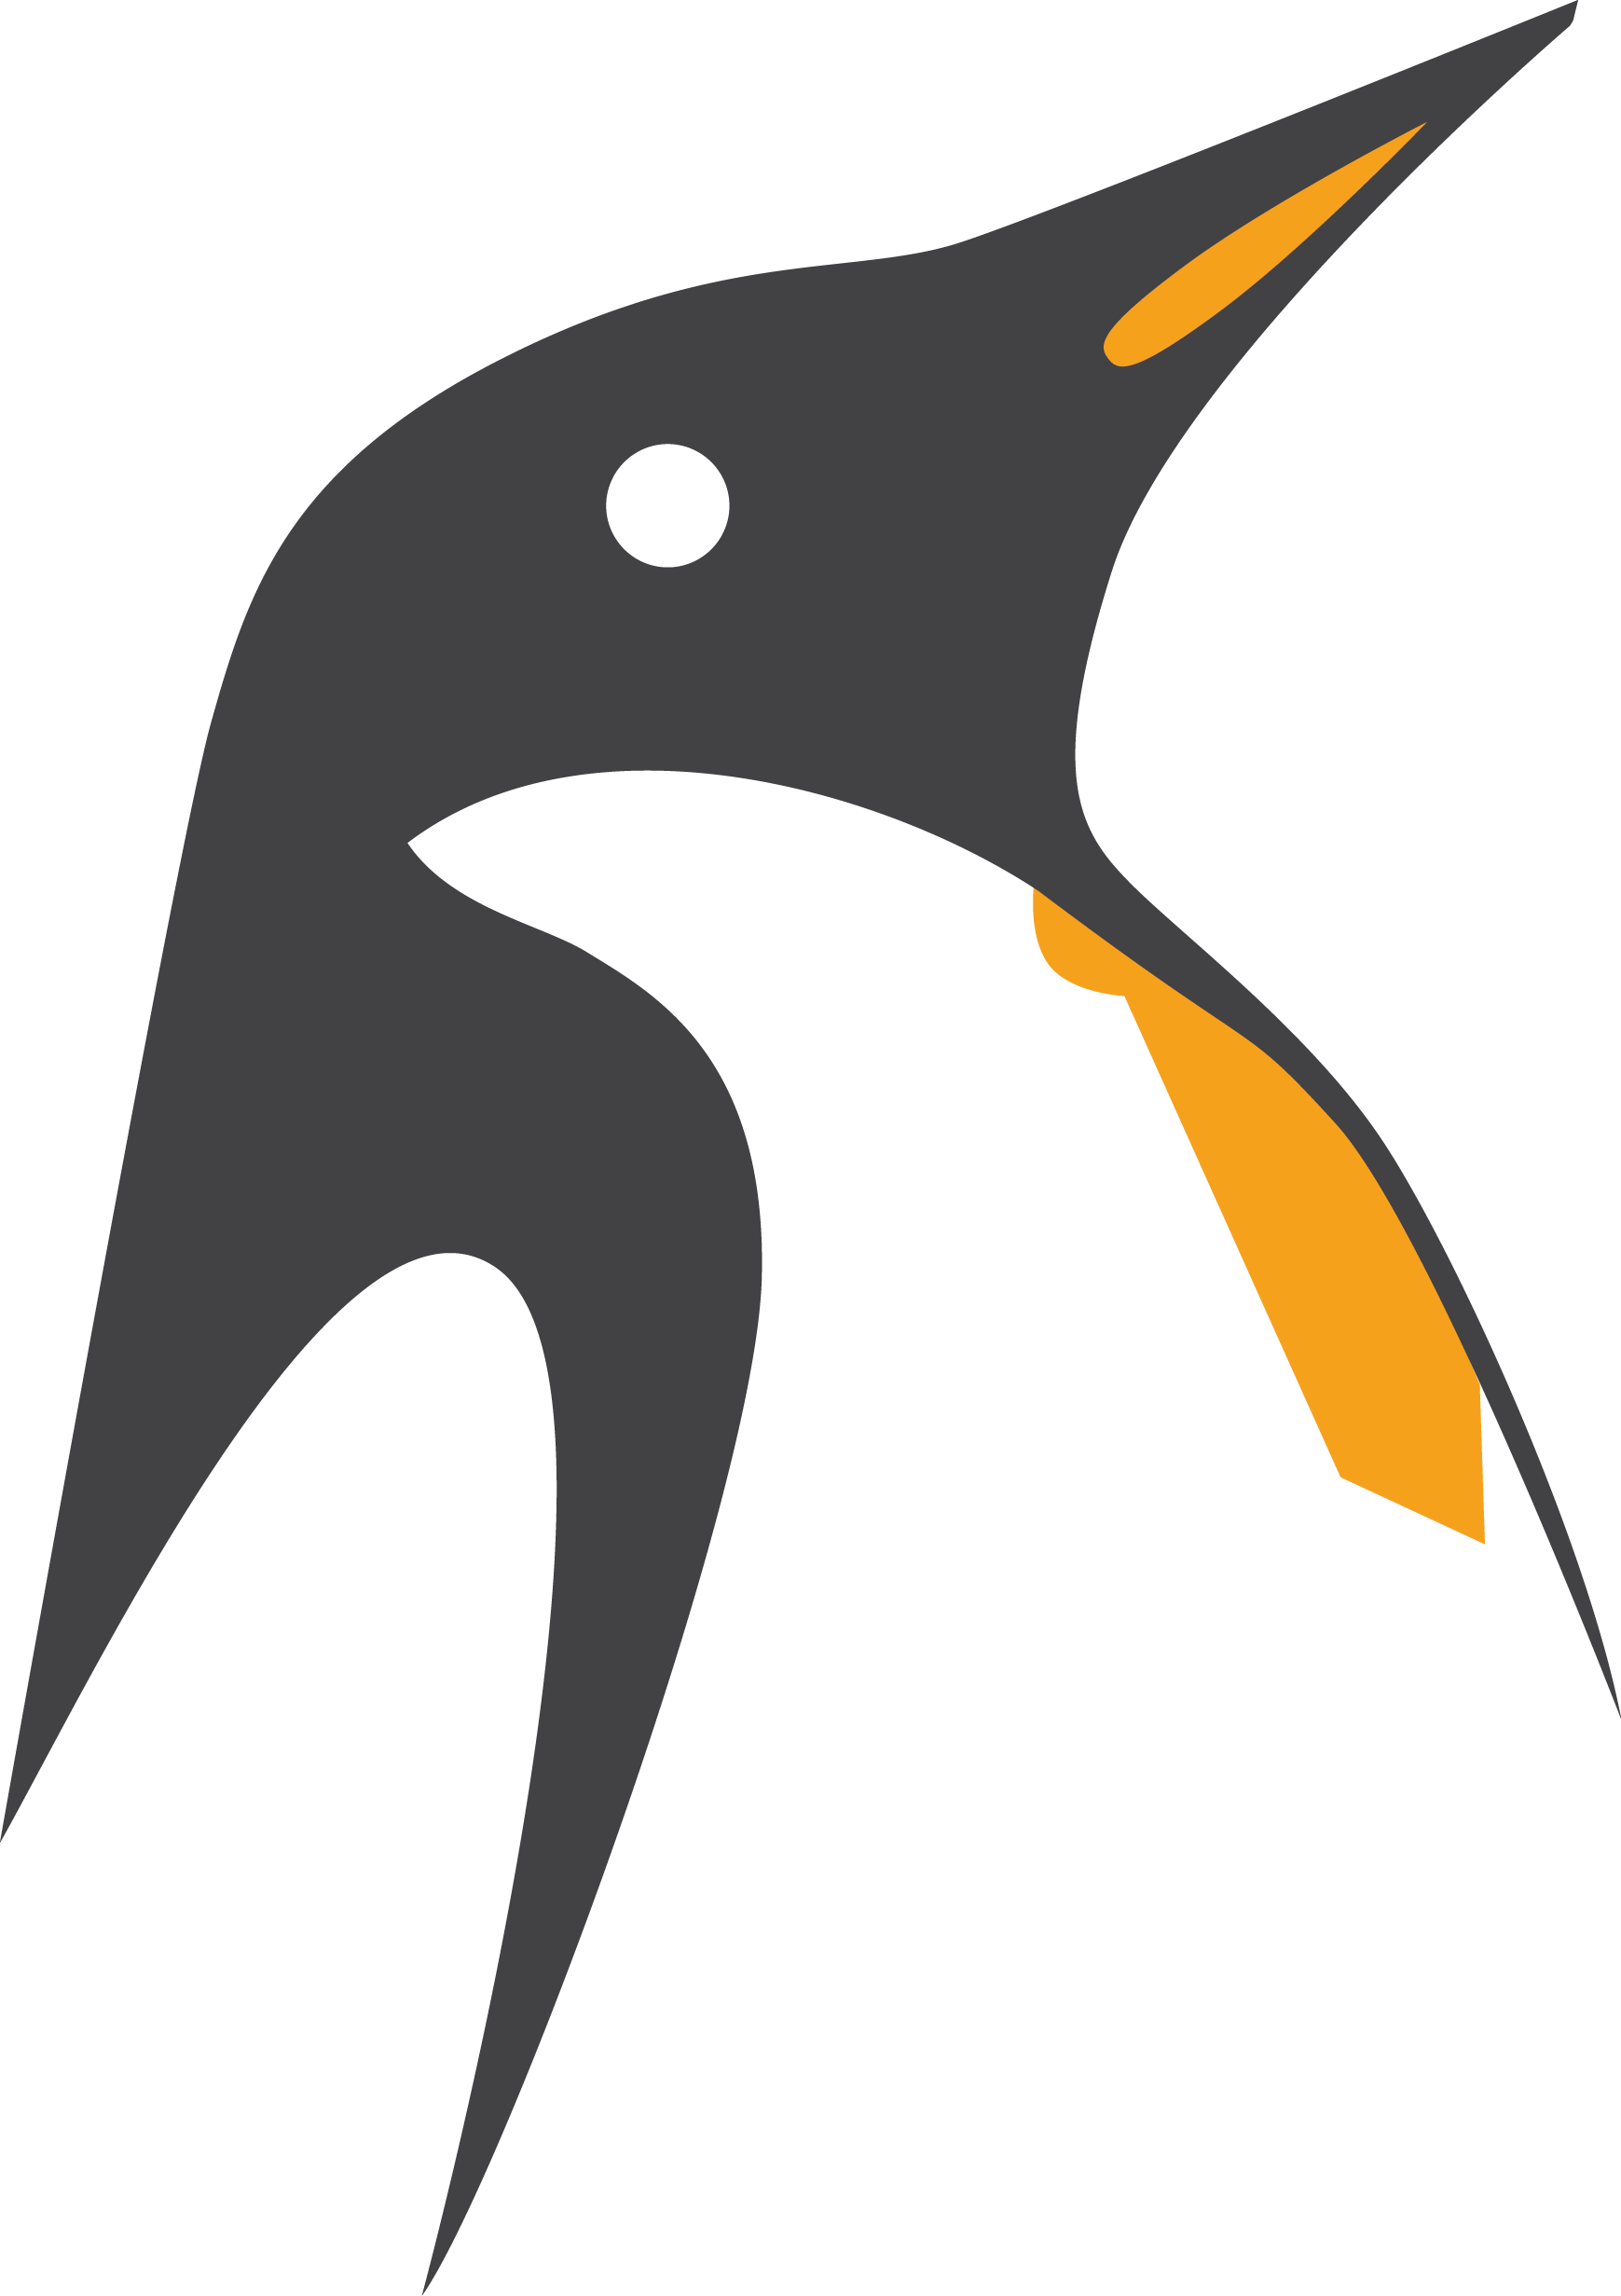 A Black And Grey Bird With Orange Beak